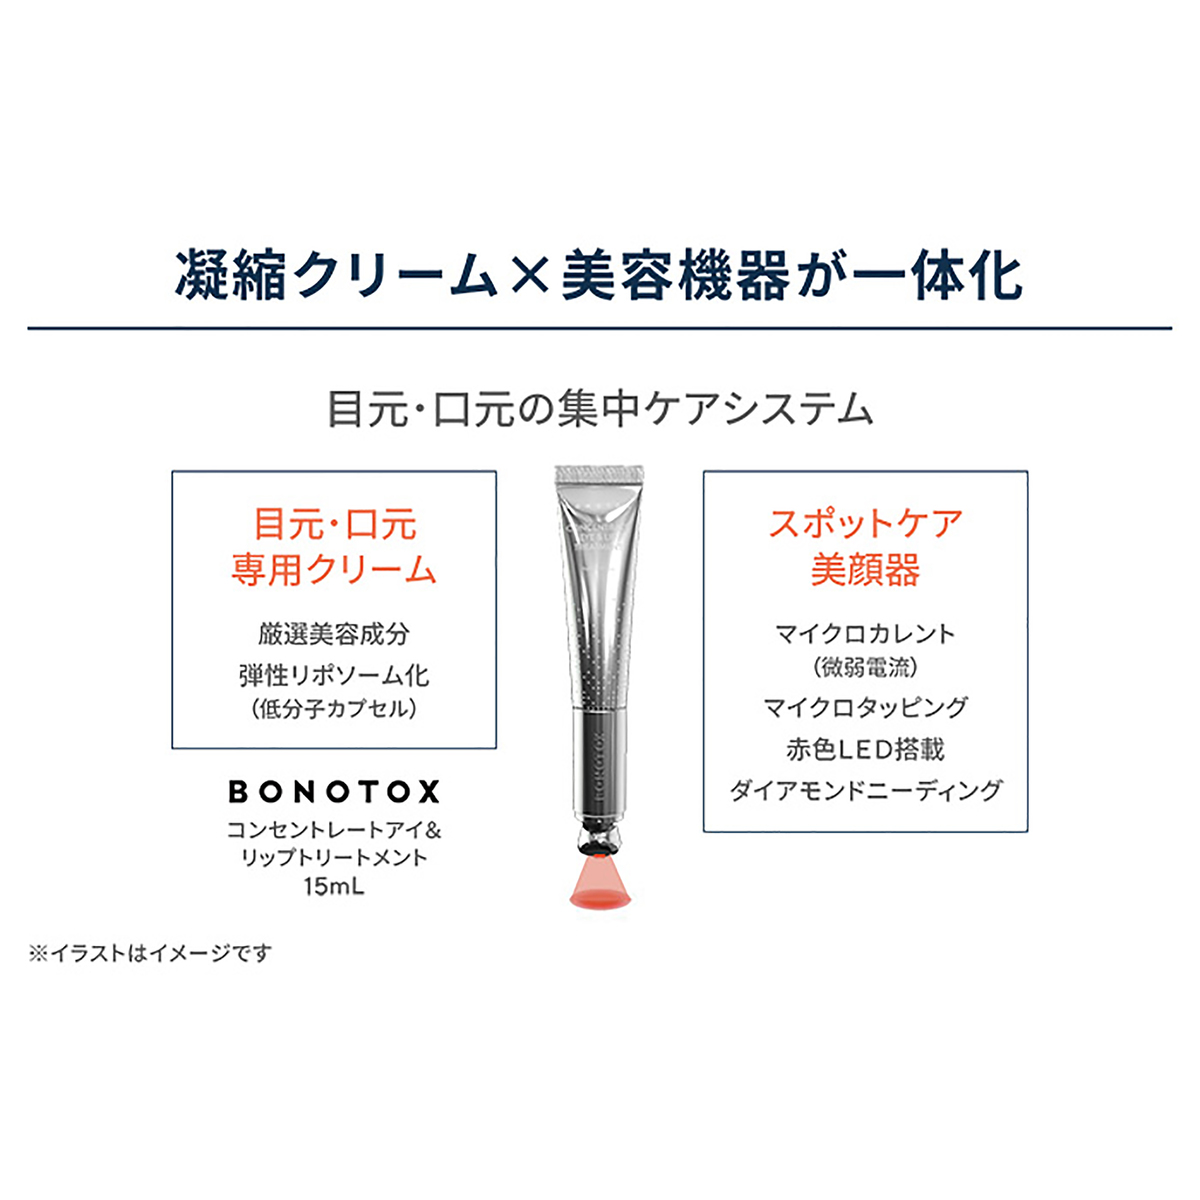 BONOTOX コンセントレートアイ&リップトリートメント - QVC.jp